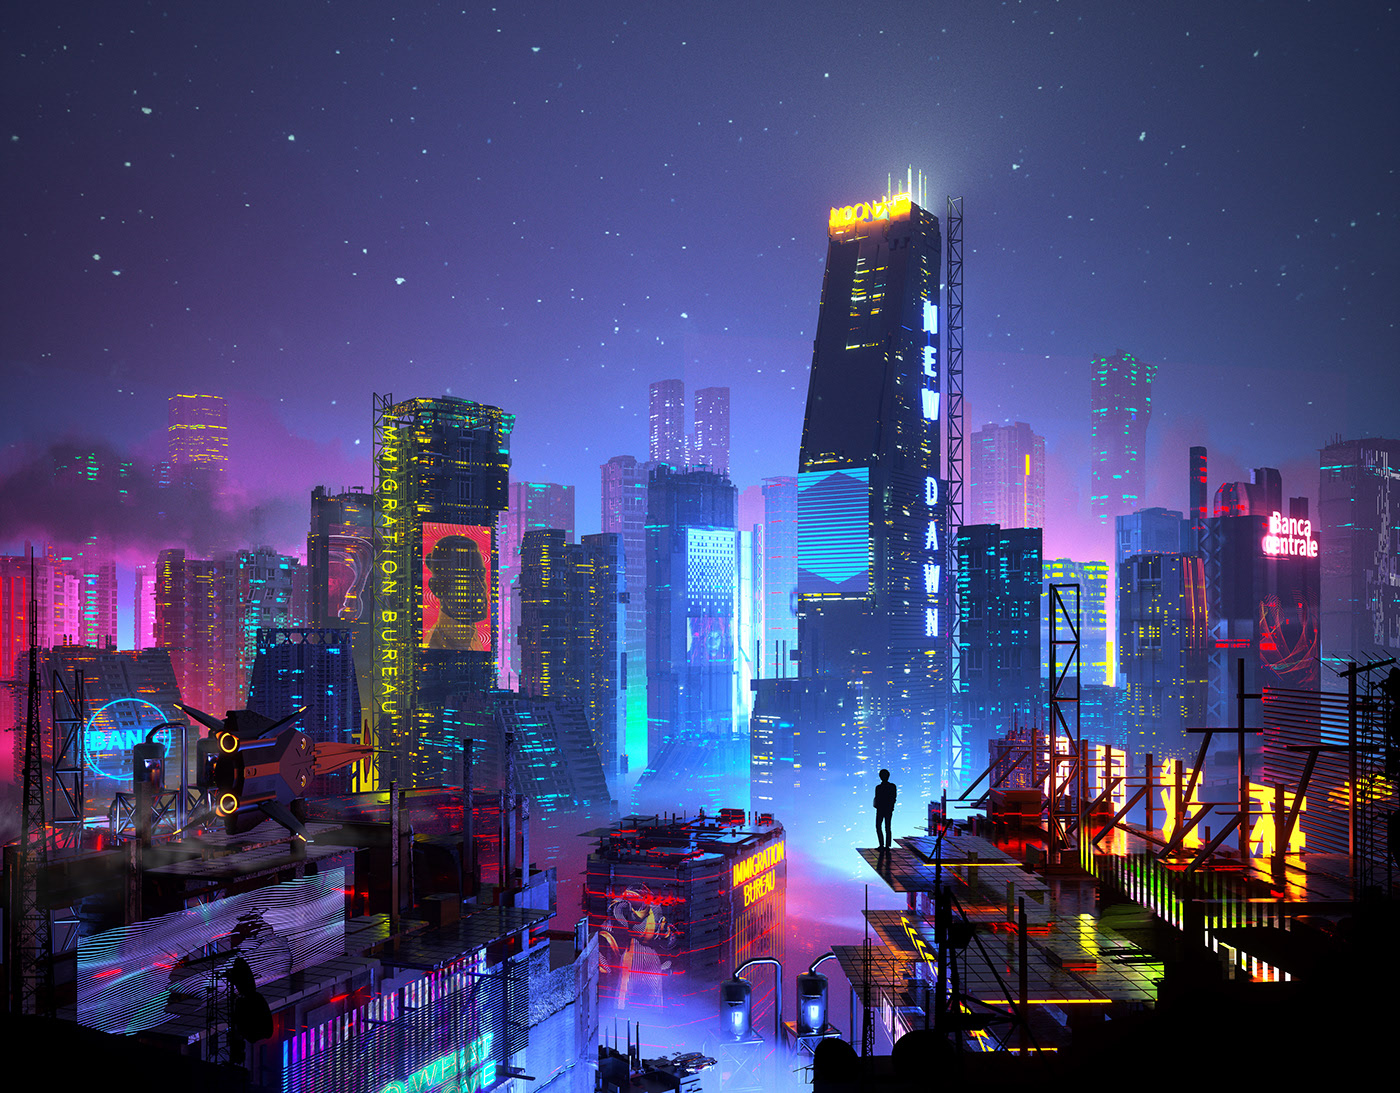 Scifi city on Behance